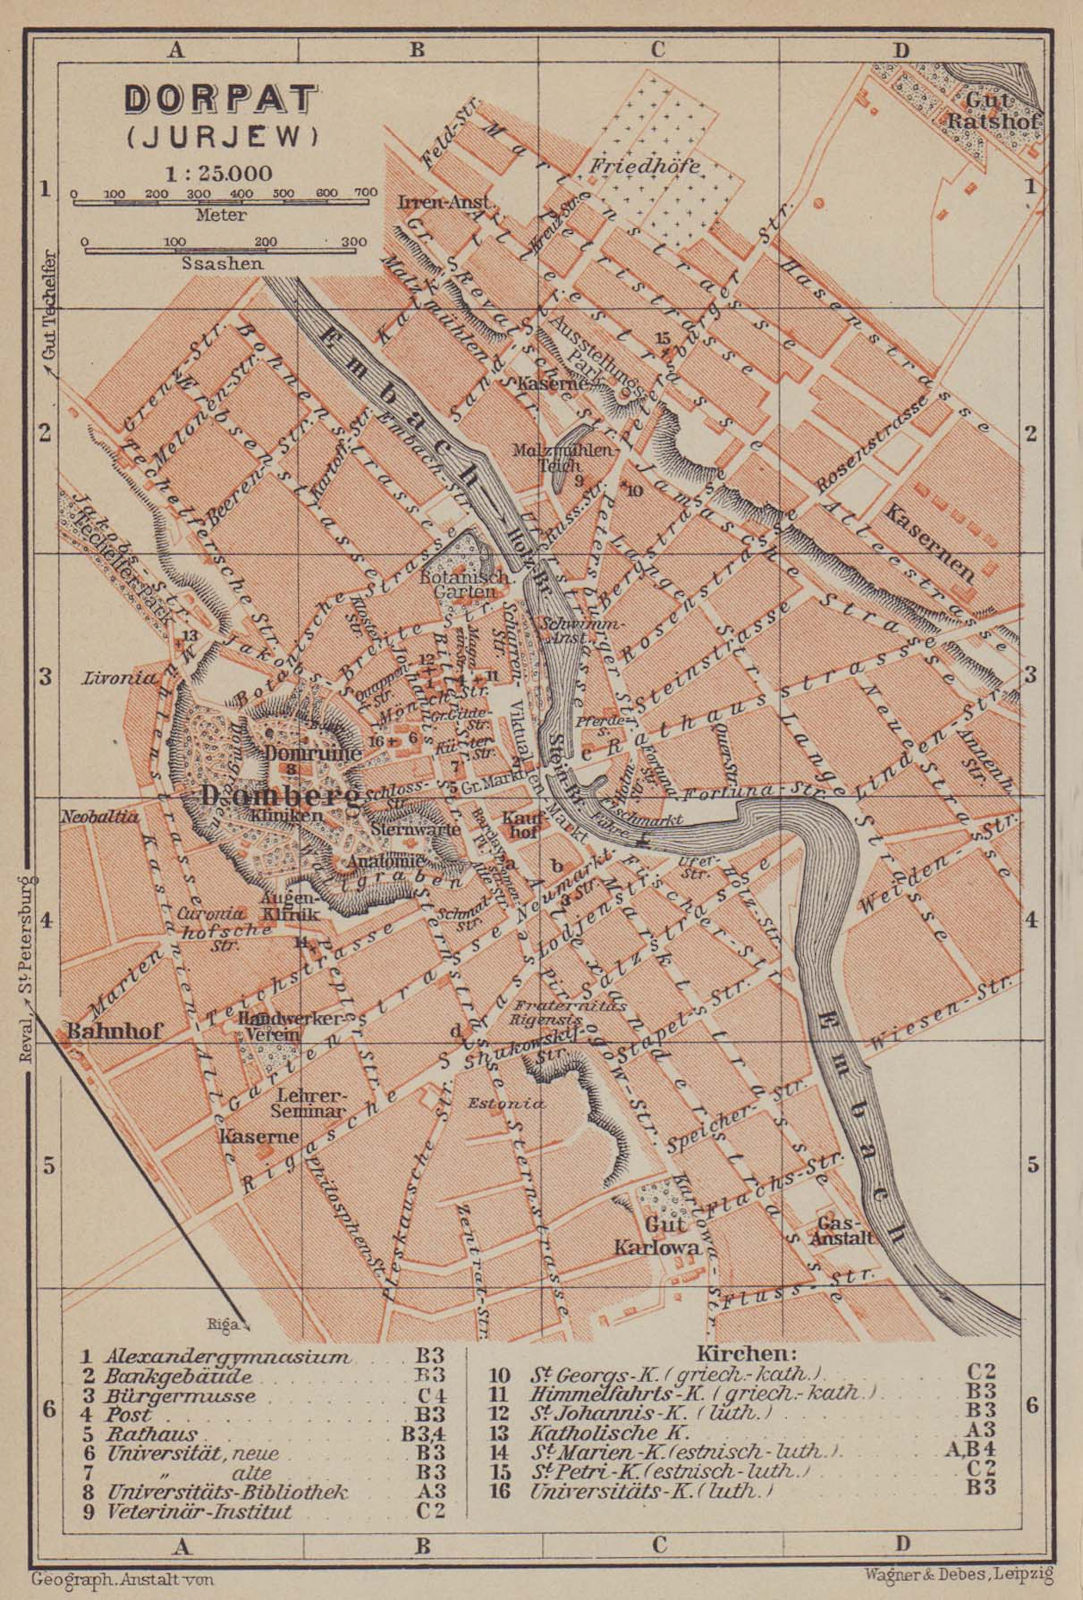 Tartu town/city plan linna kaart. Estonia. Dorpat/Jurjew. BAEDEKER 1914 map